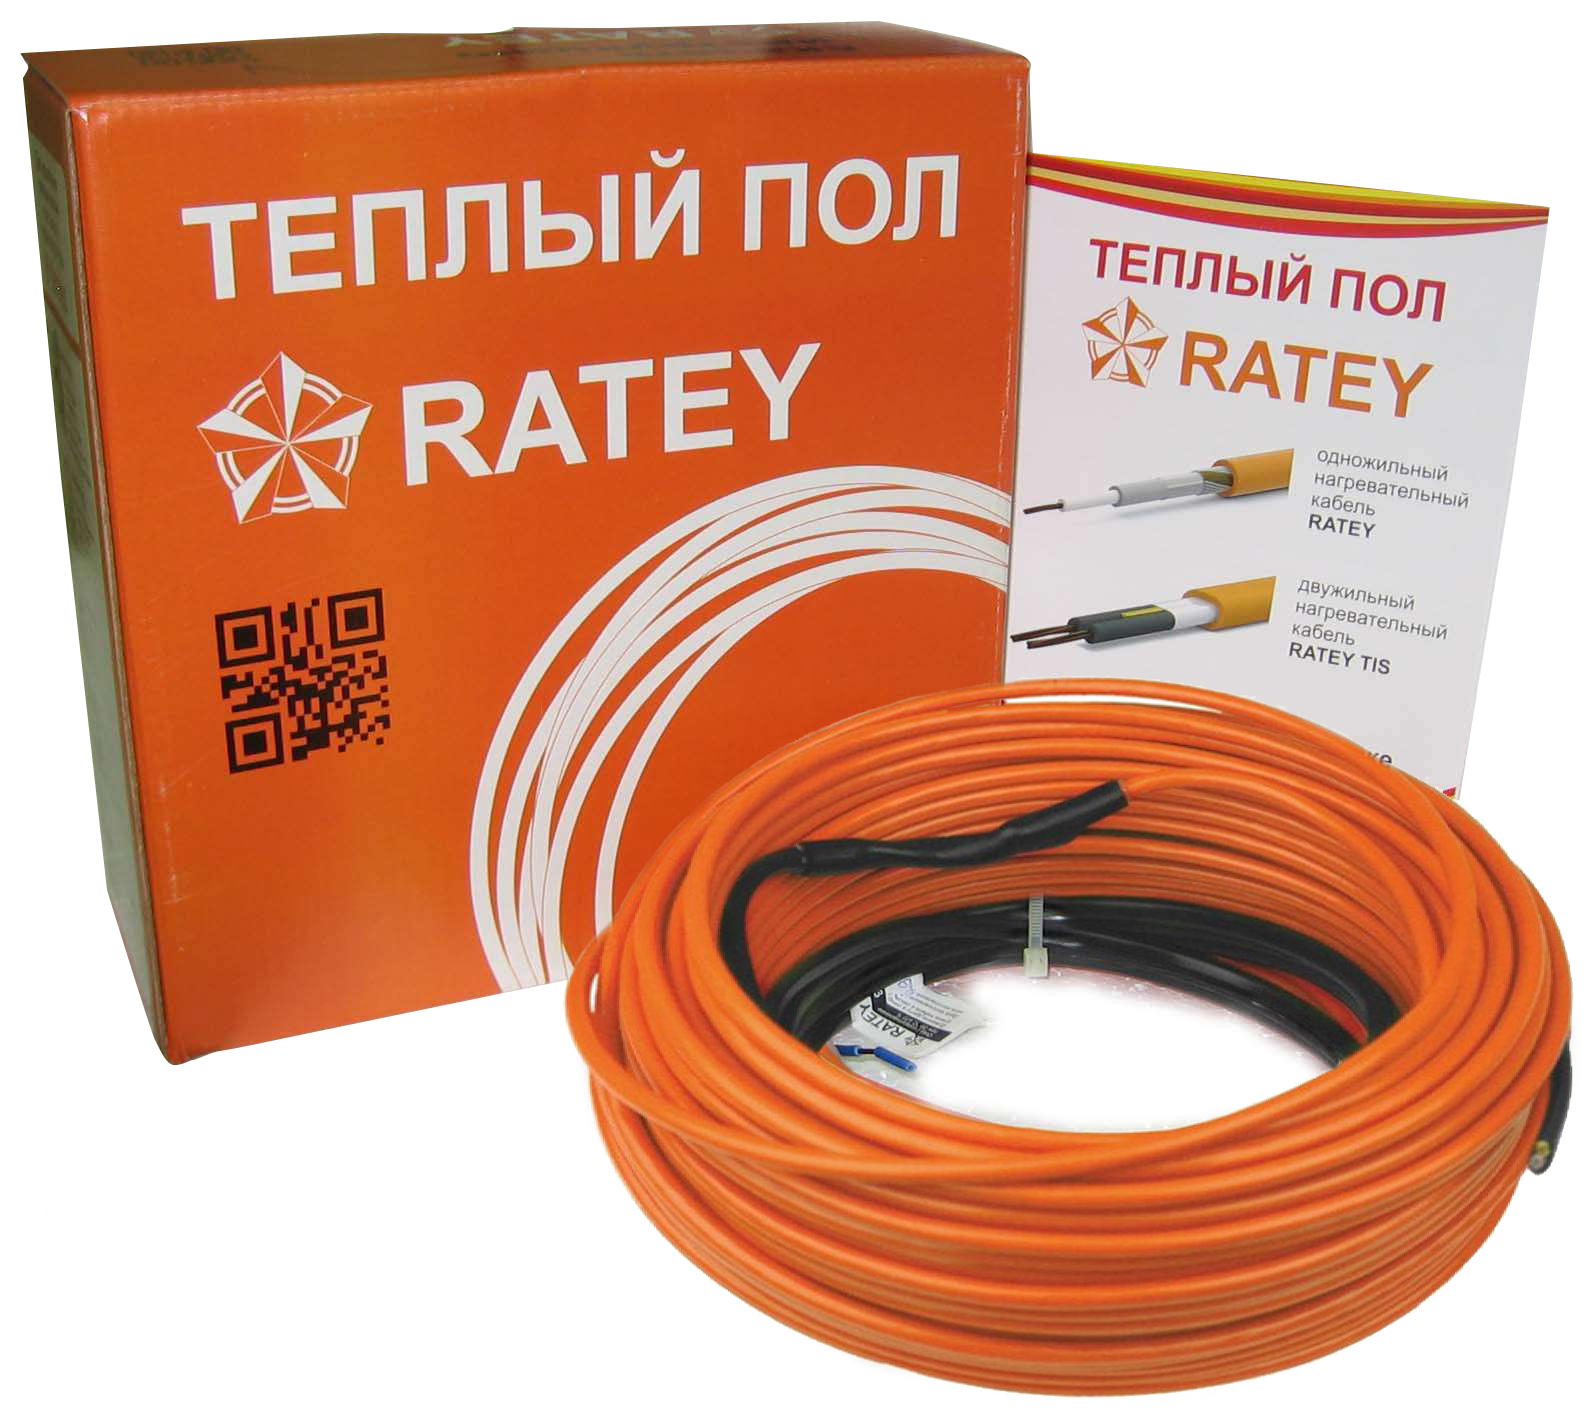 Электрический теплый пол Ratey RD1 0.175